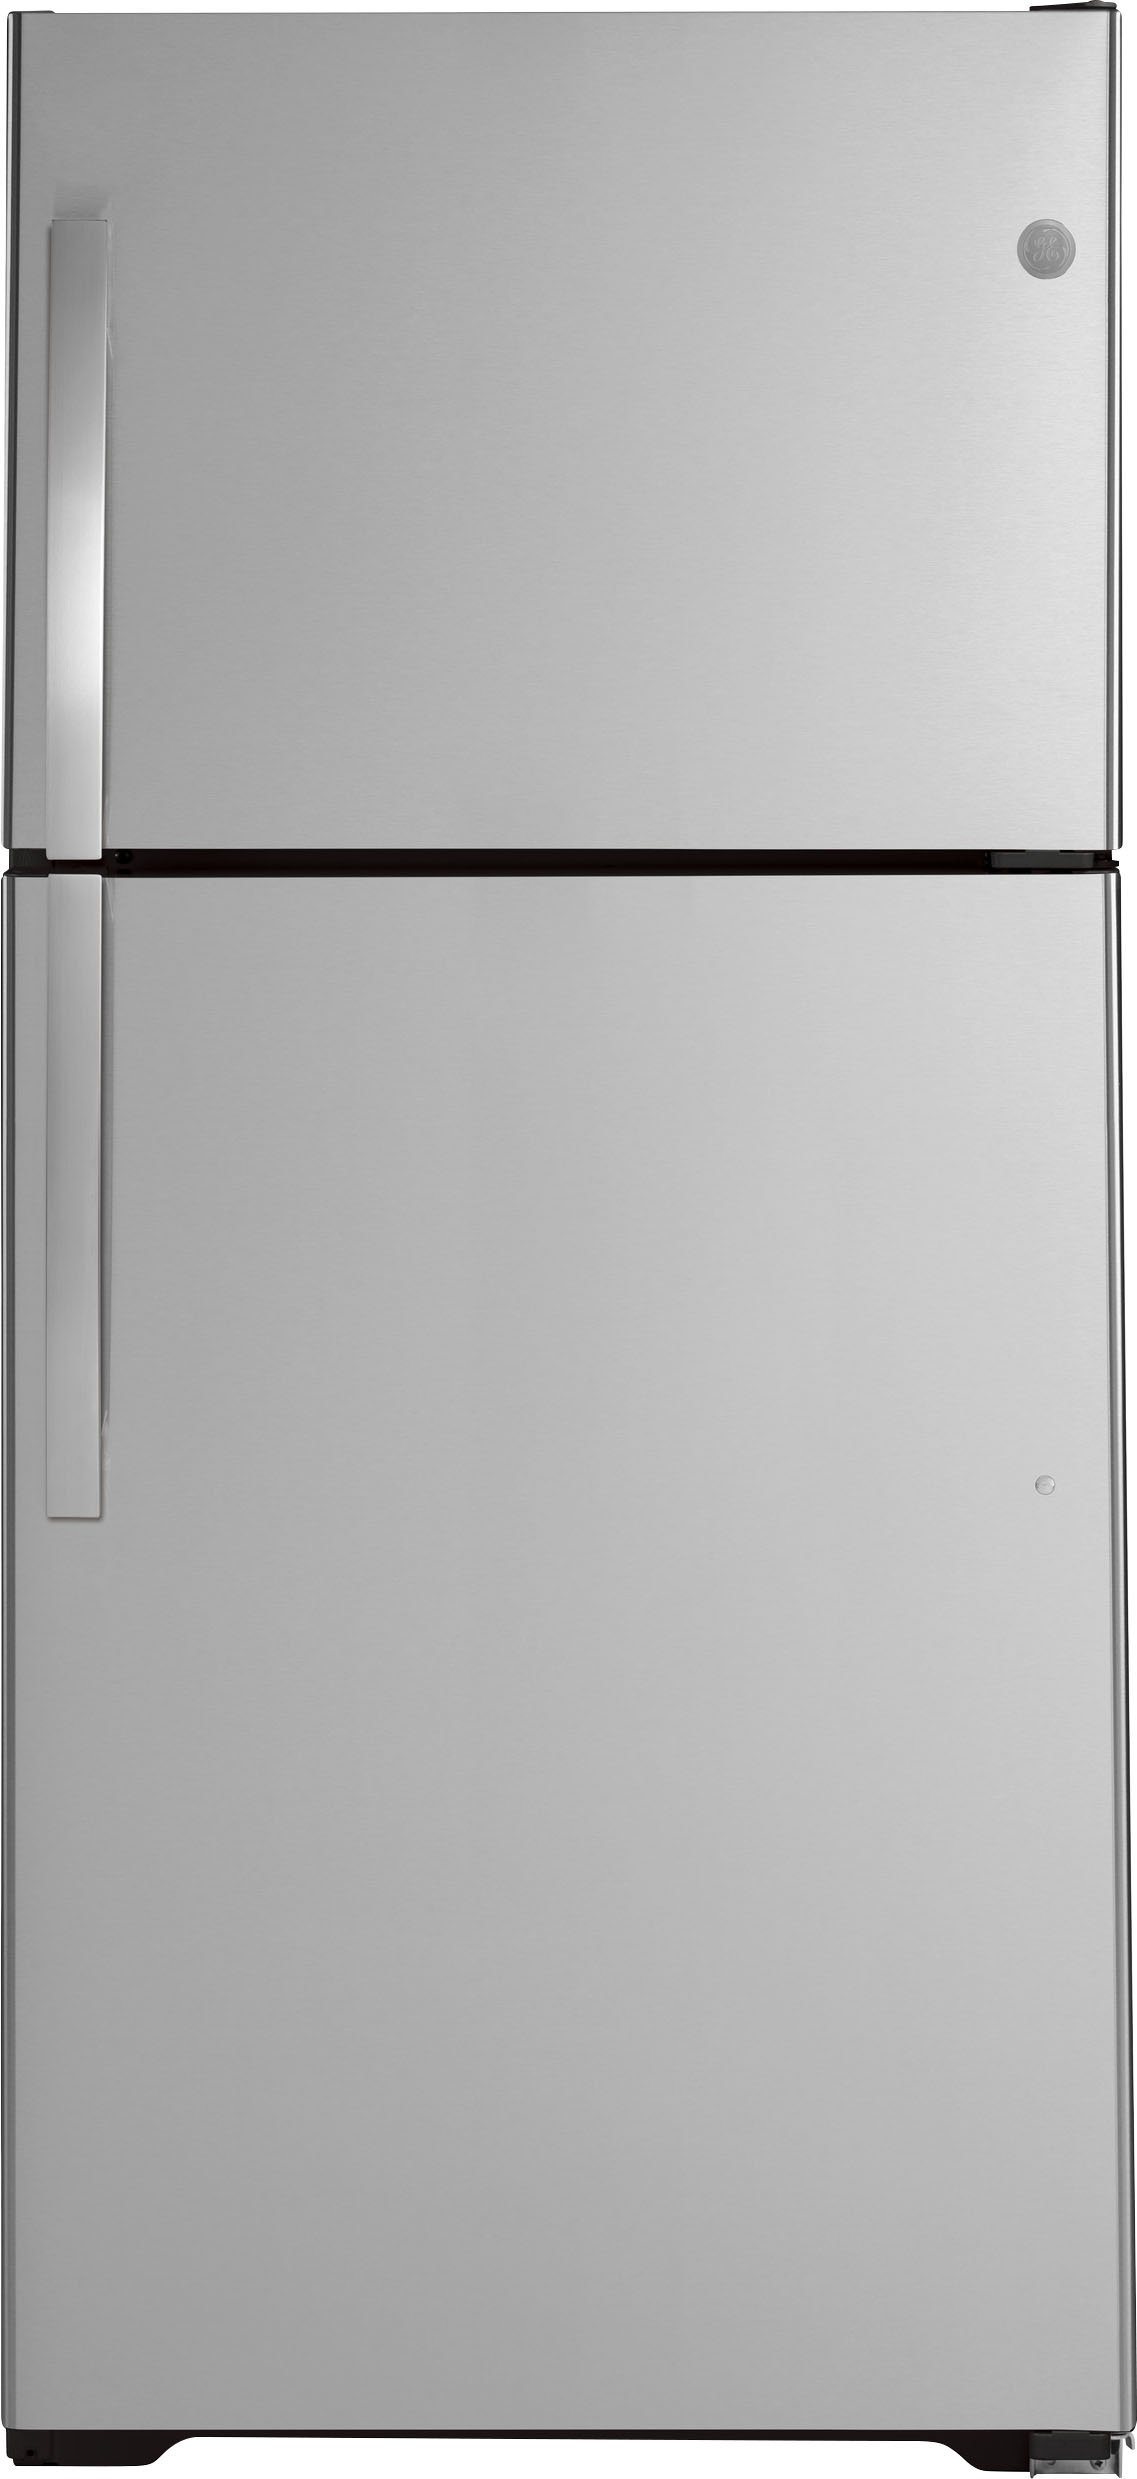 GE - 21.9 Cu. Ft. Garage-Ready Top-Freezer Refrigerator - Stainless Steel